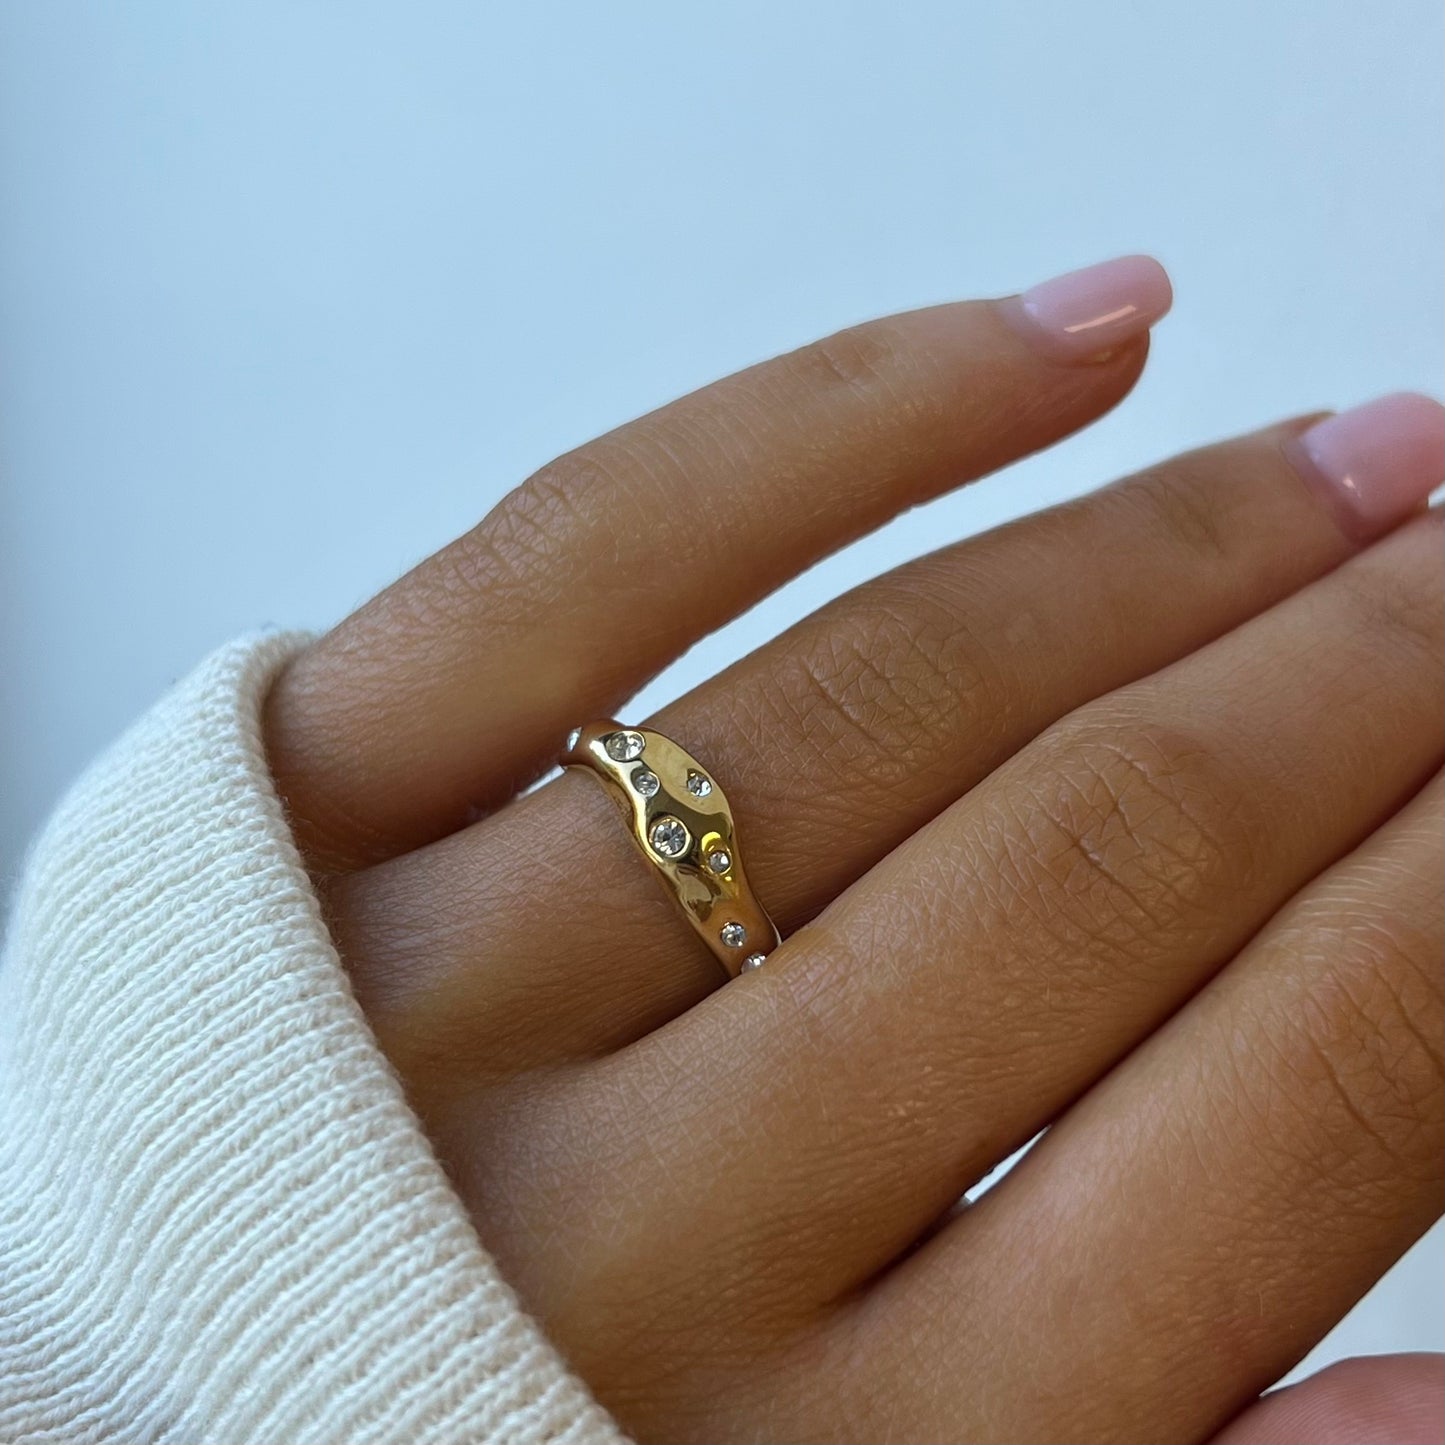 Irregular Gold Ring with Rhinestones